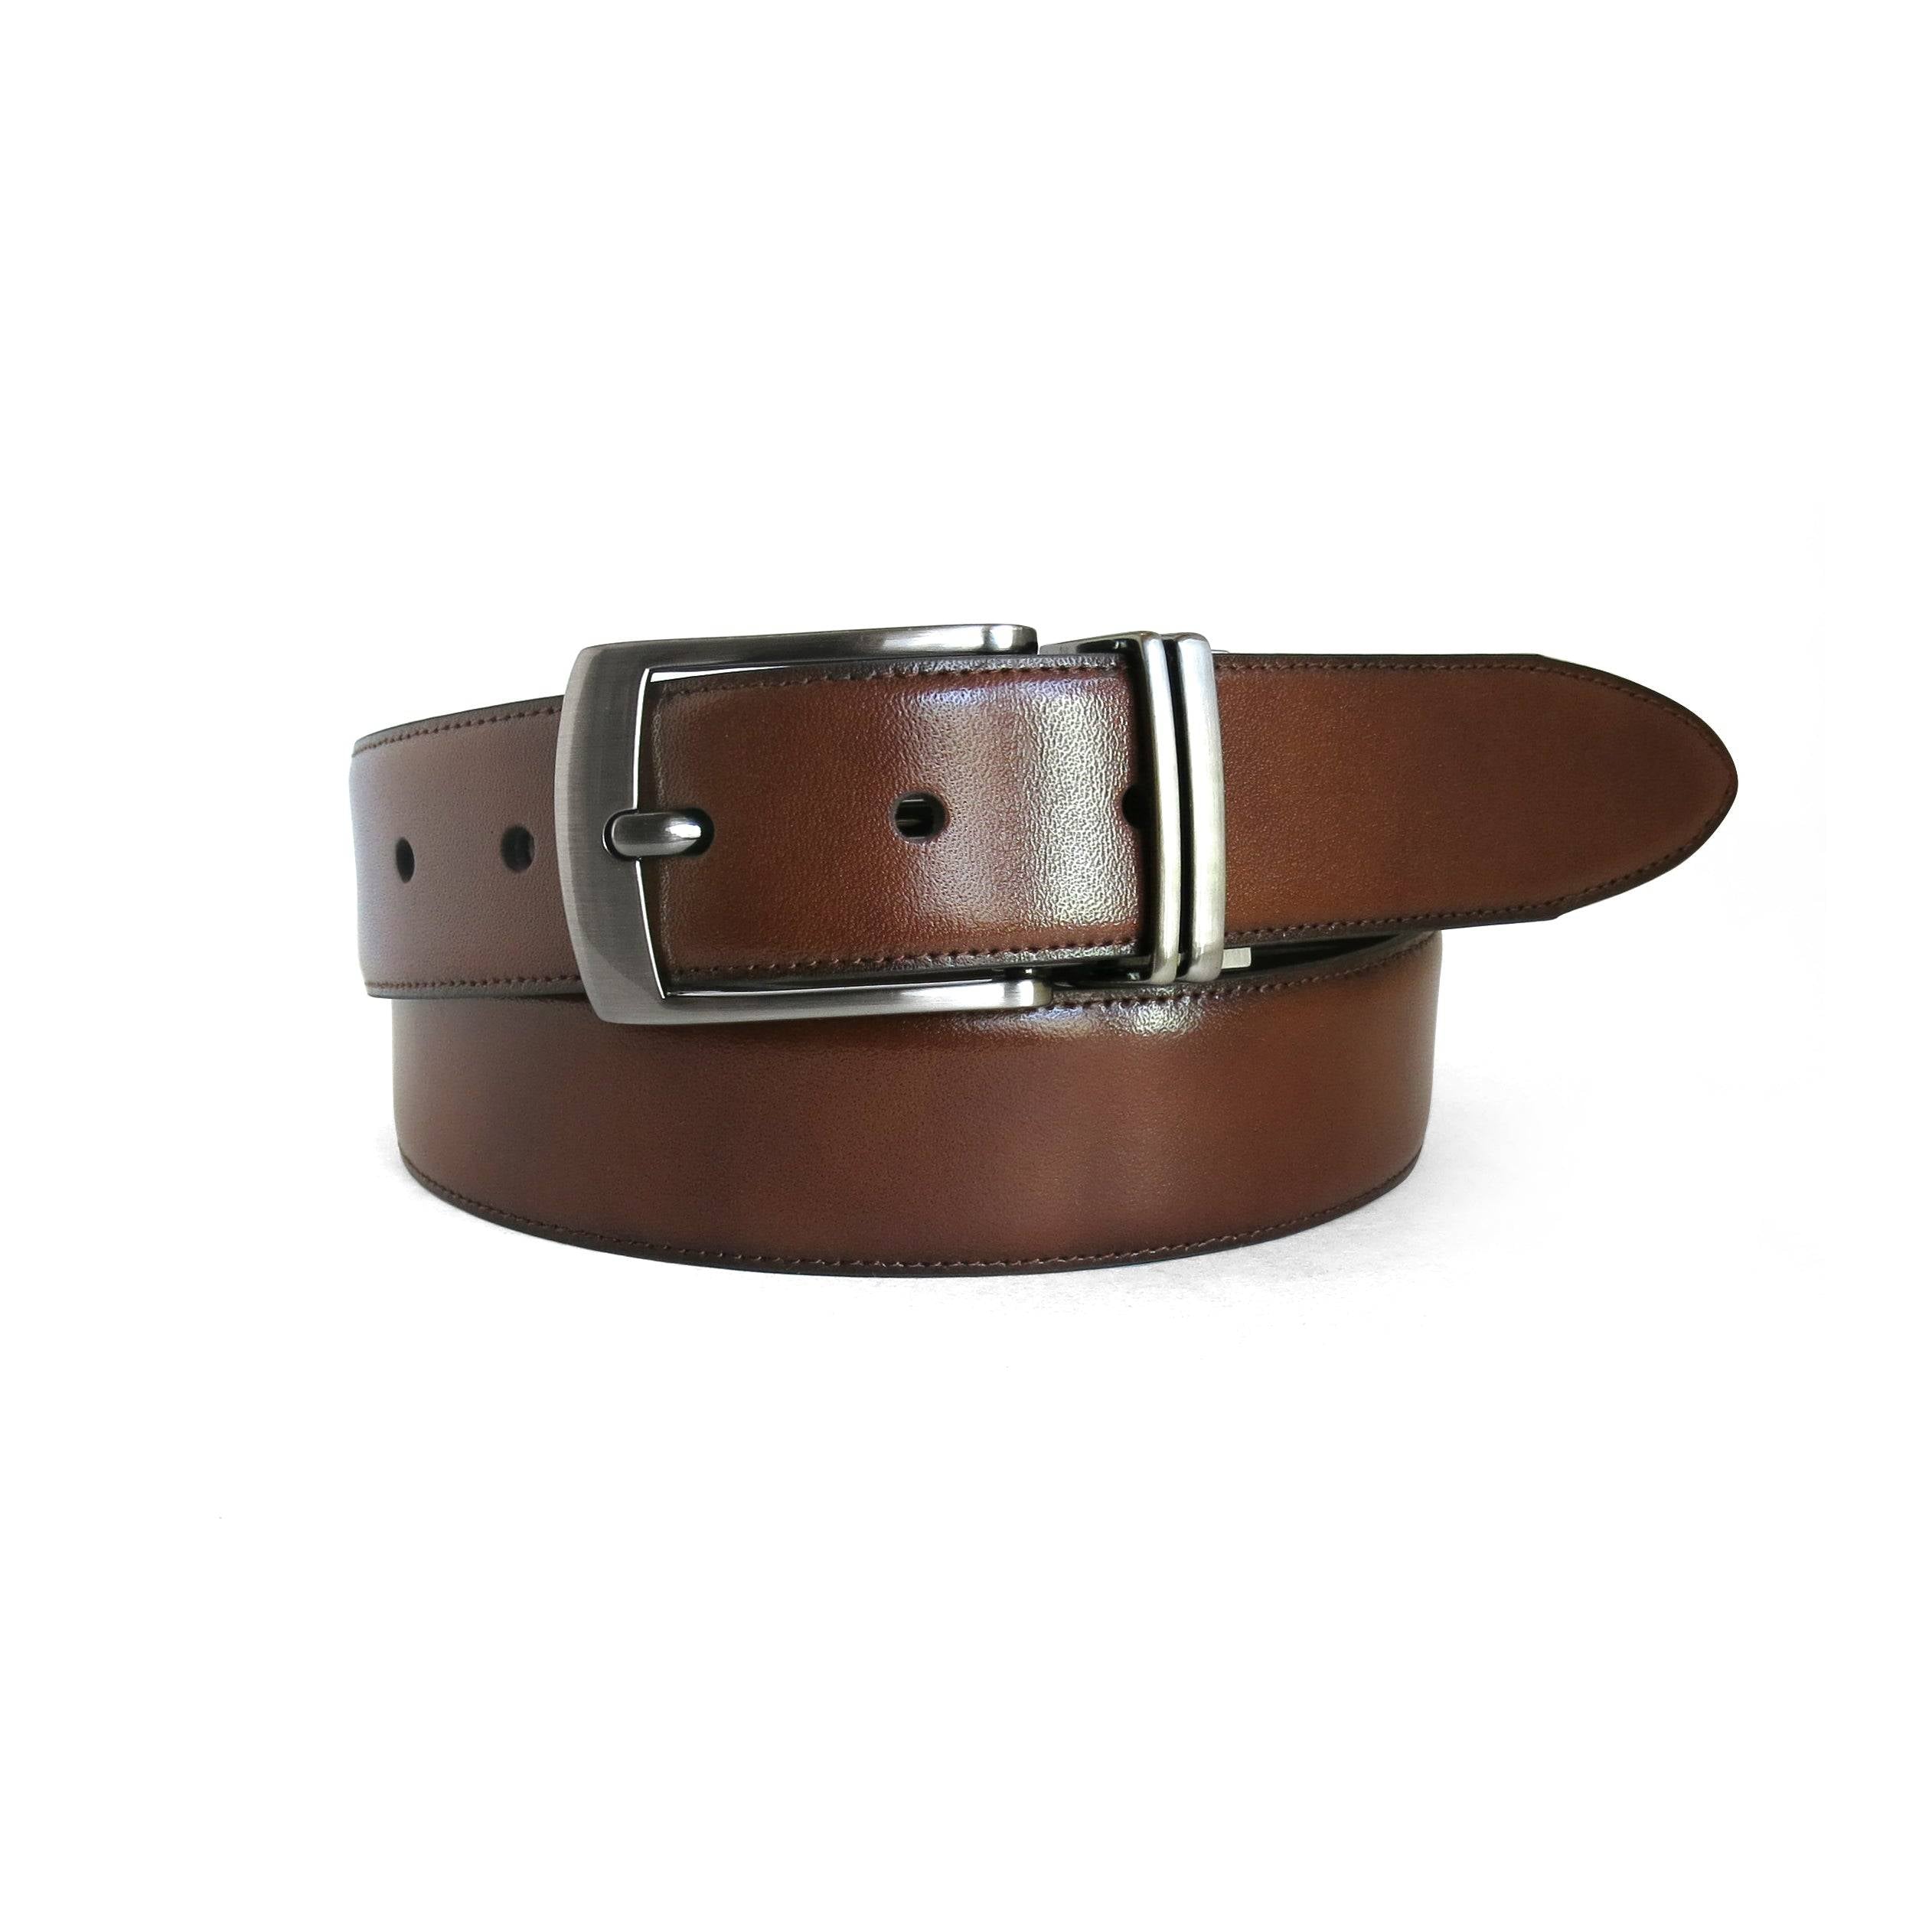 Shop Leather Belt For Men - Premium Leather Belts